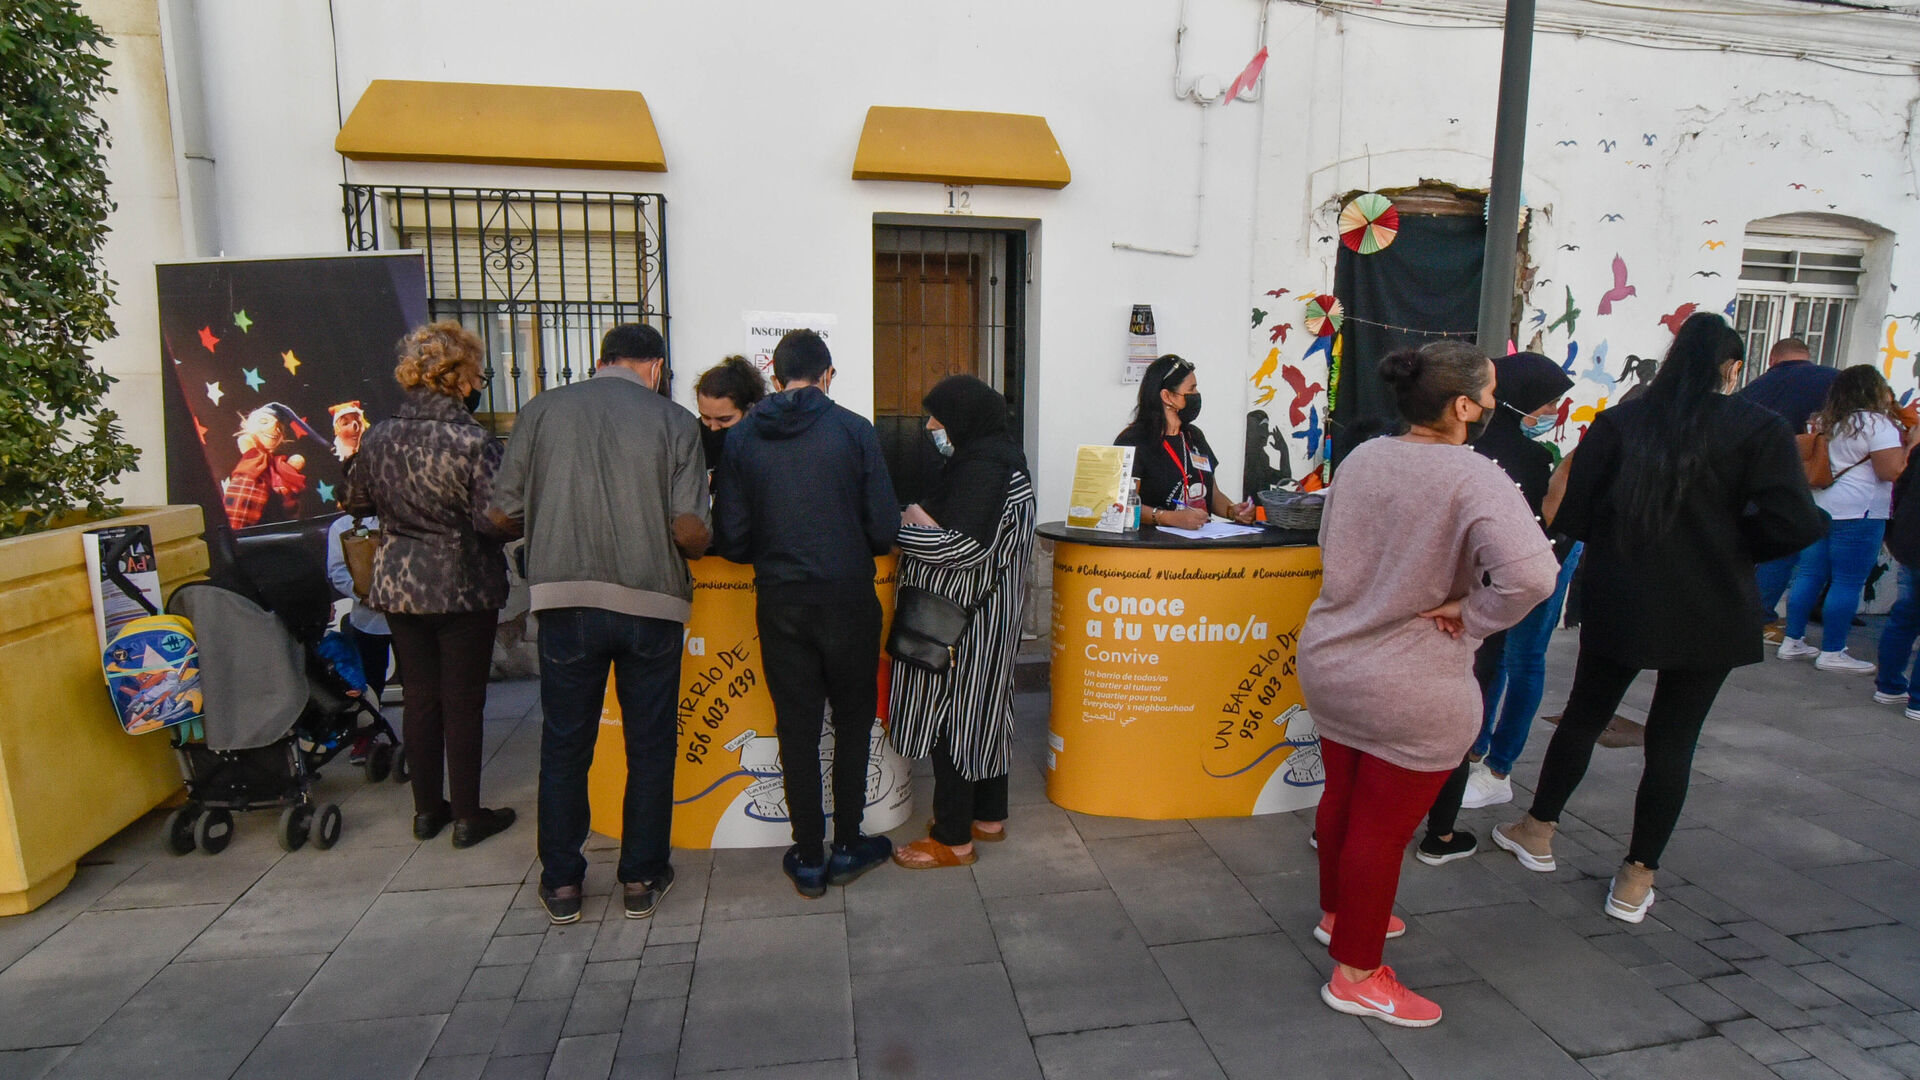 Convivencia de Un barrio de todos en Algeciras